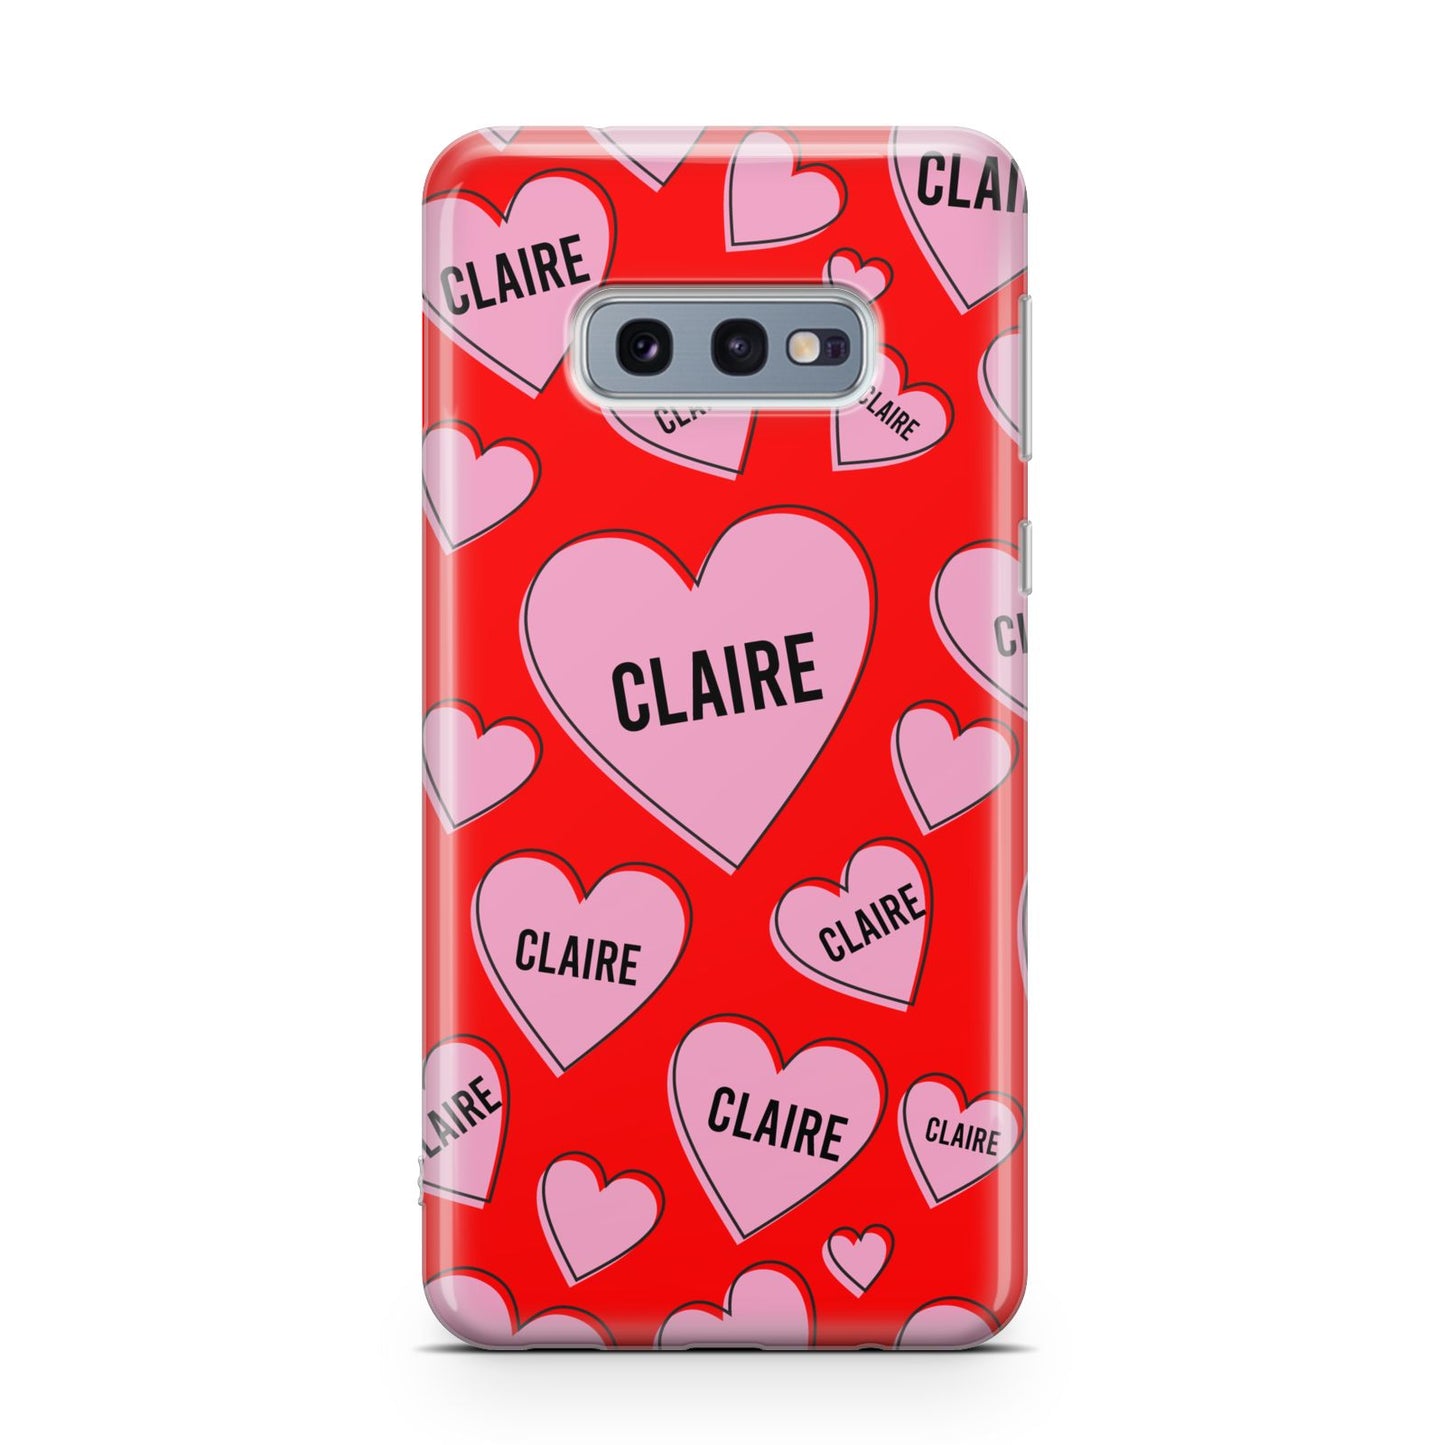 Personalised Hearts Samsung Galaxy S10E Case